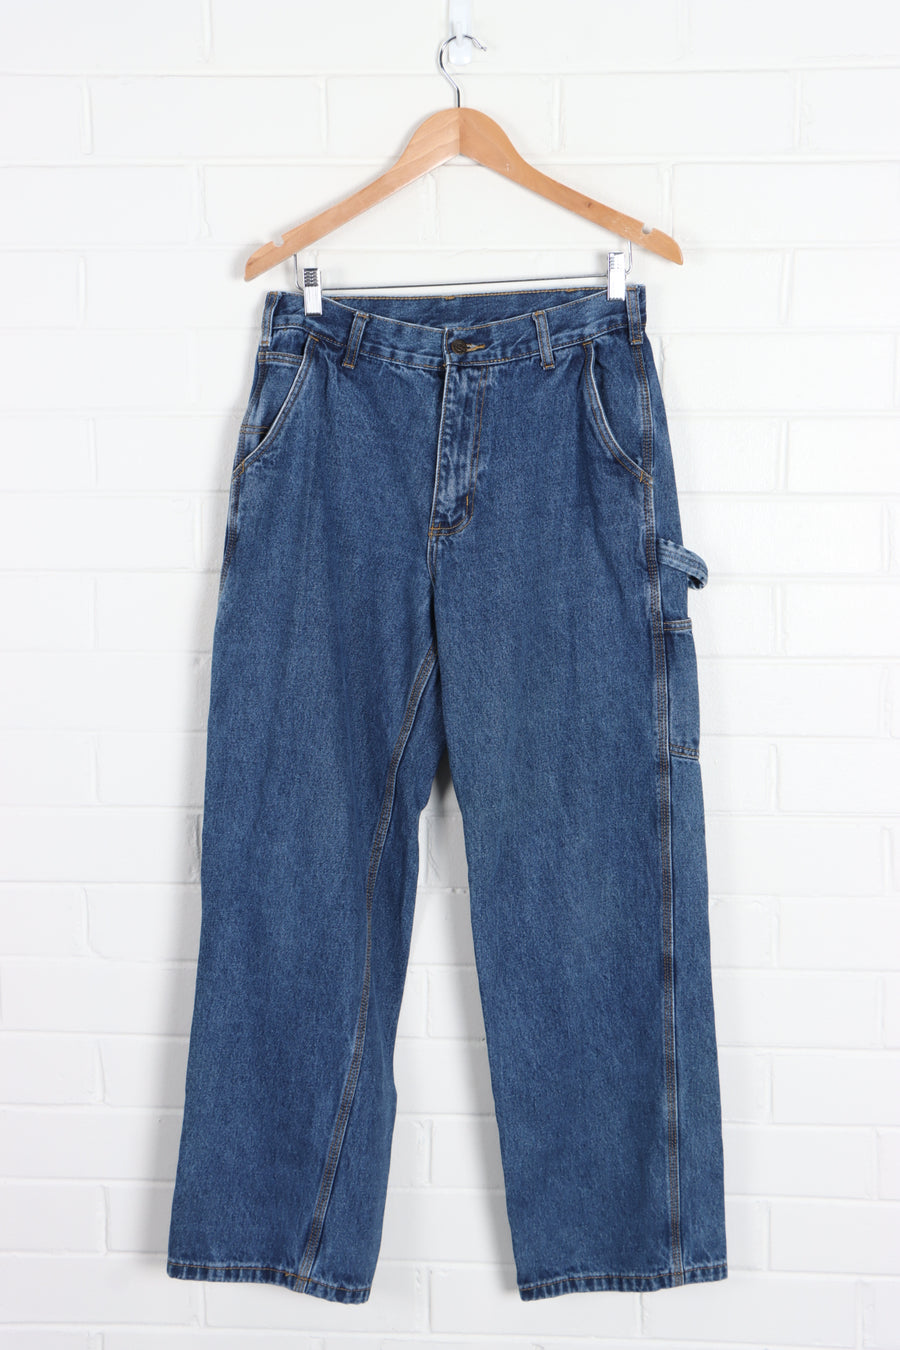 Original R.K Brand Workwear Jeans (32 x 32) - Vintage Sole Melbourne